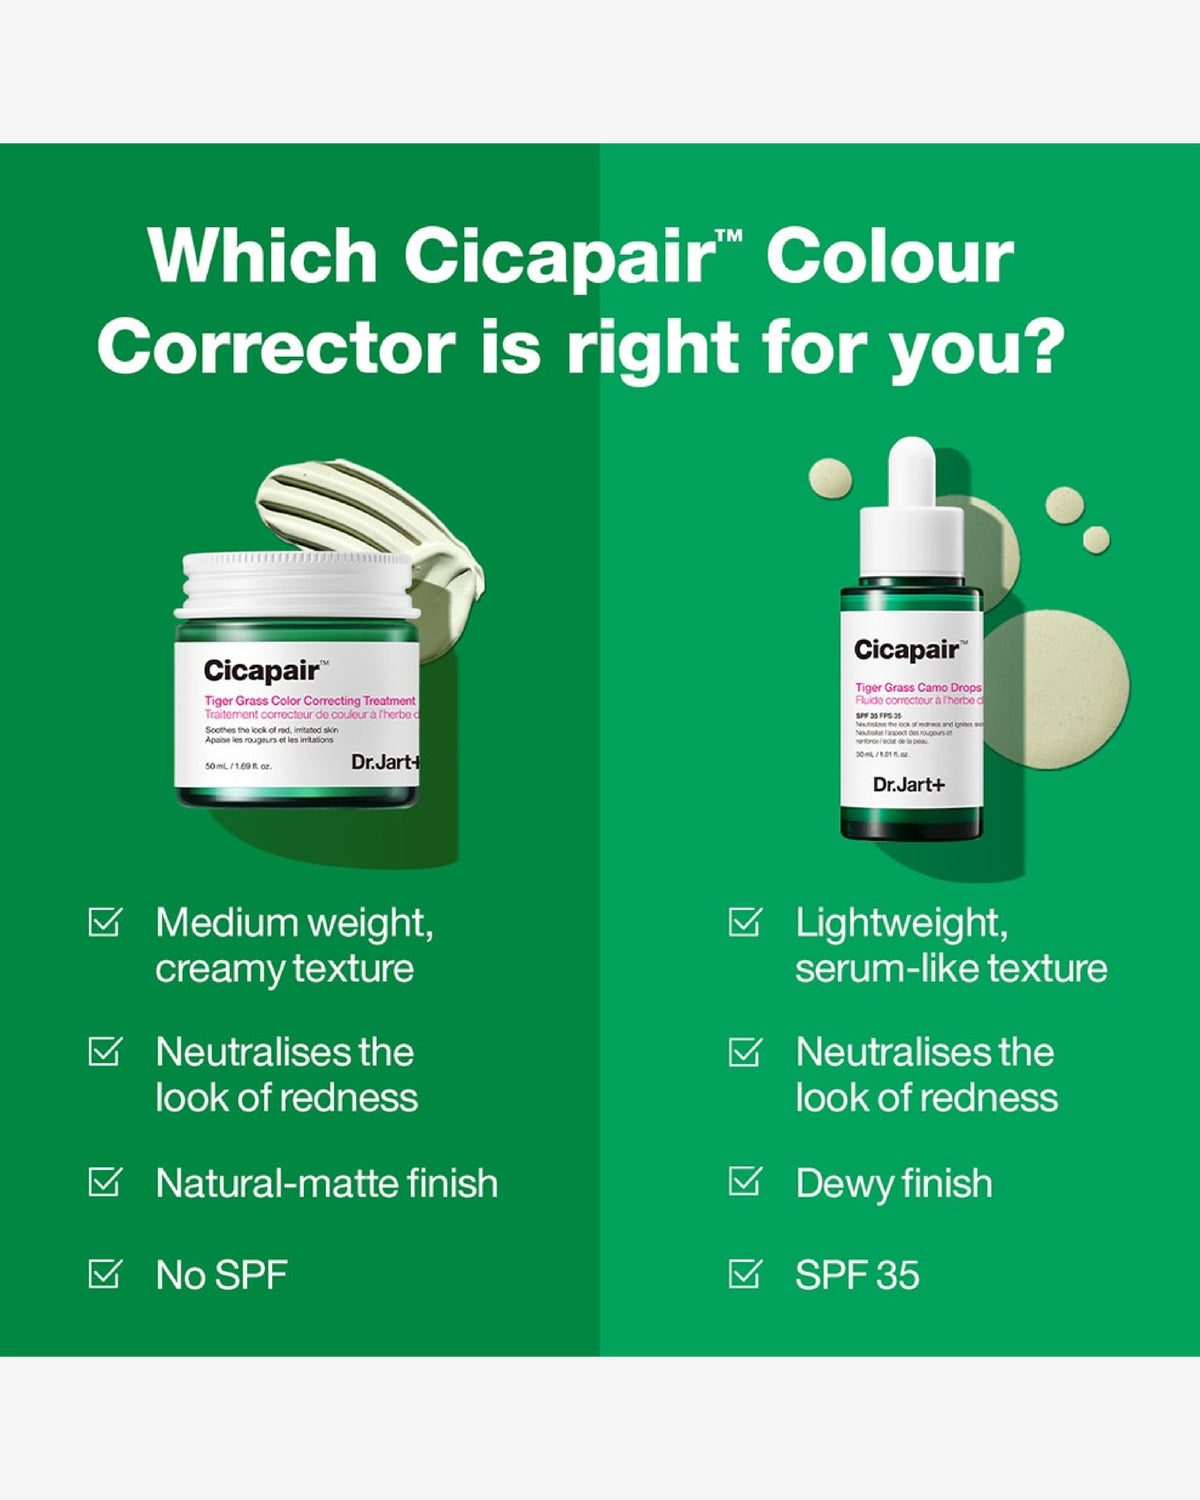 Cicapair™ Tiger Grass Colour Correcting Treatment